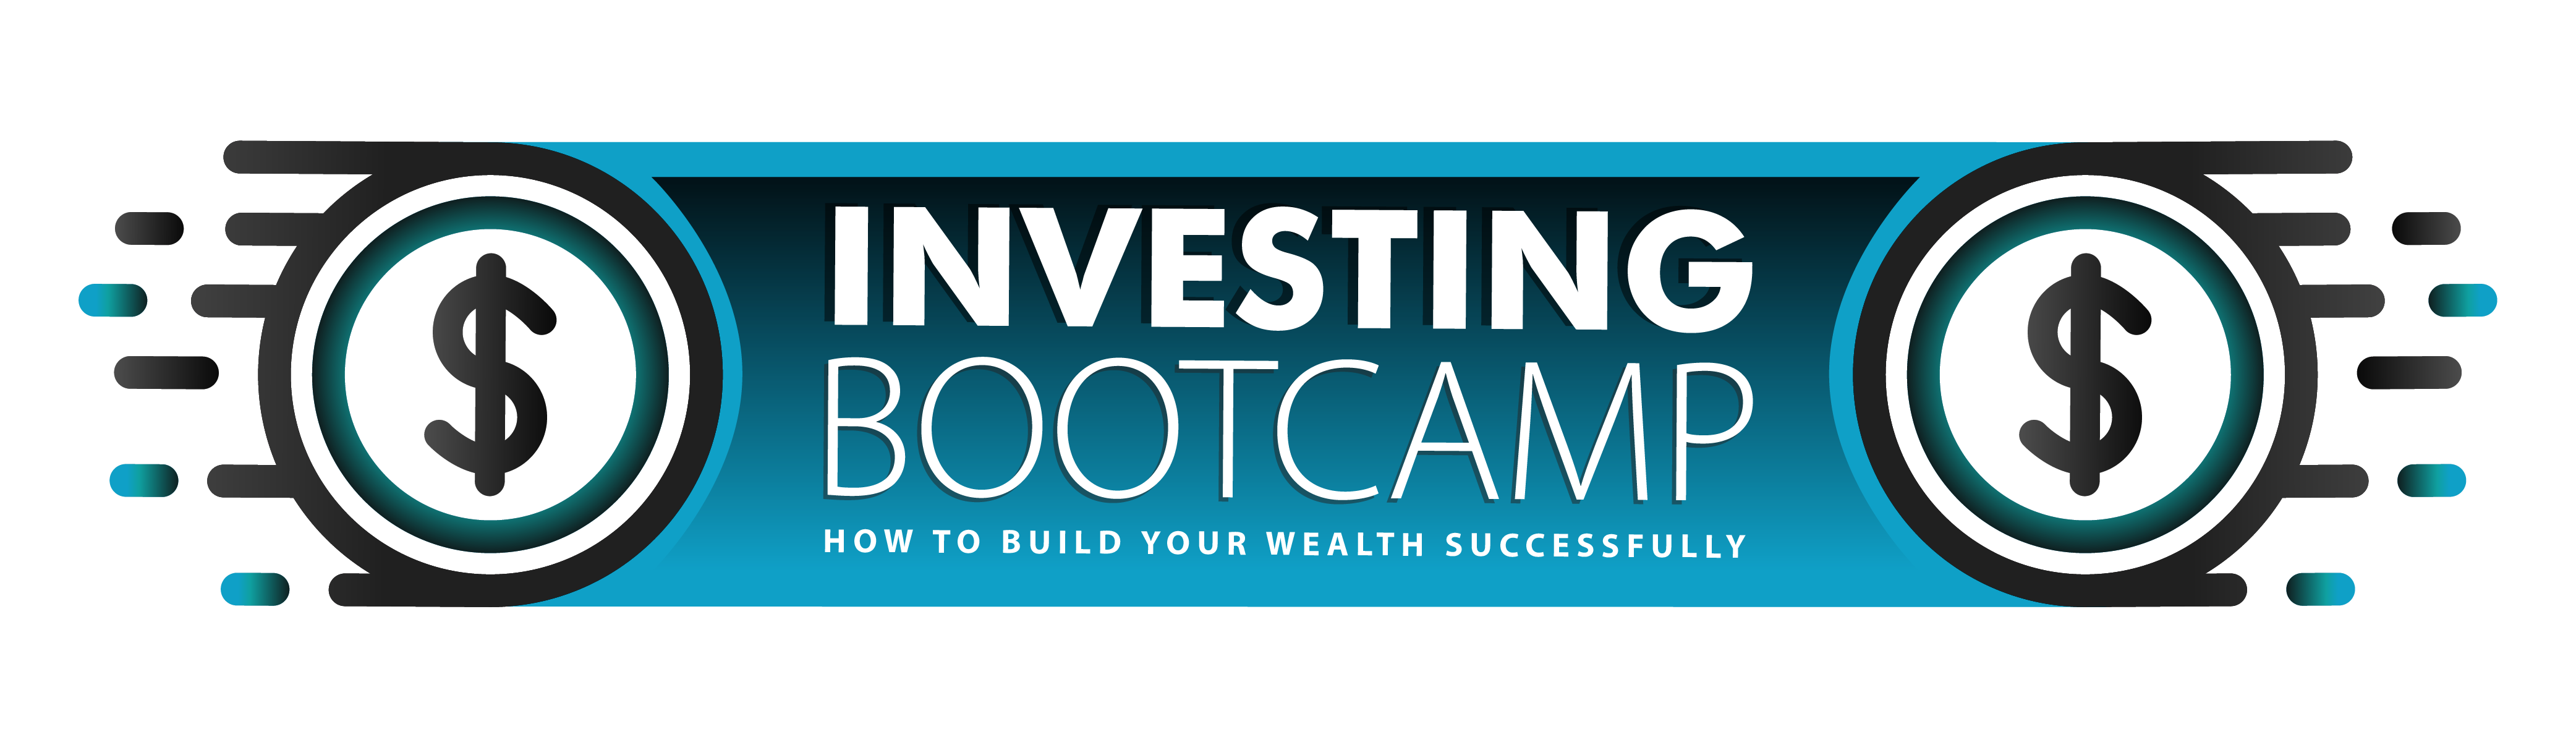 Investing Bootcamp